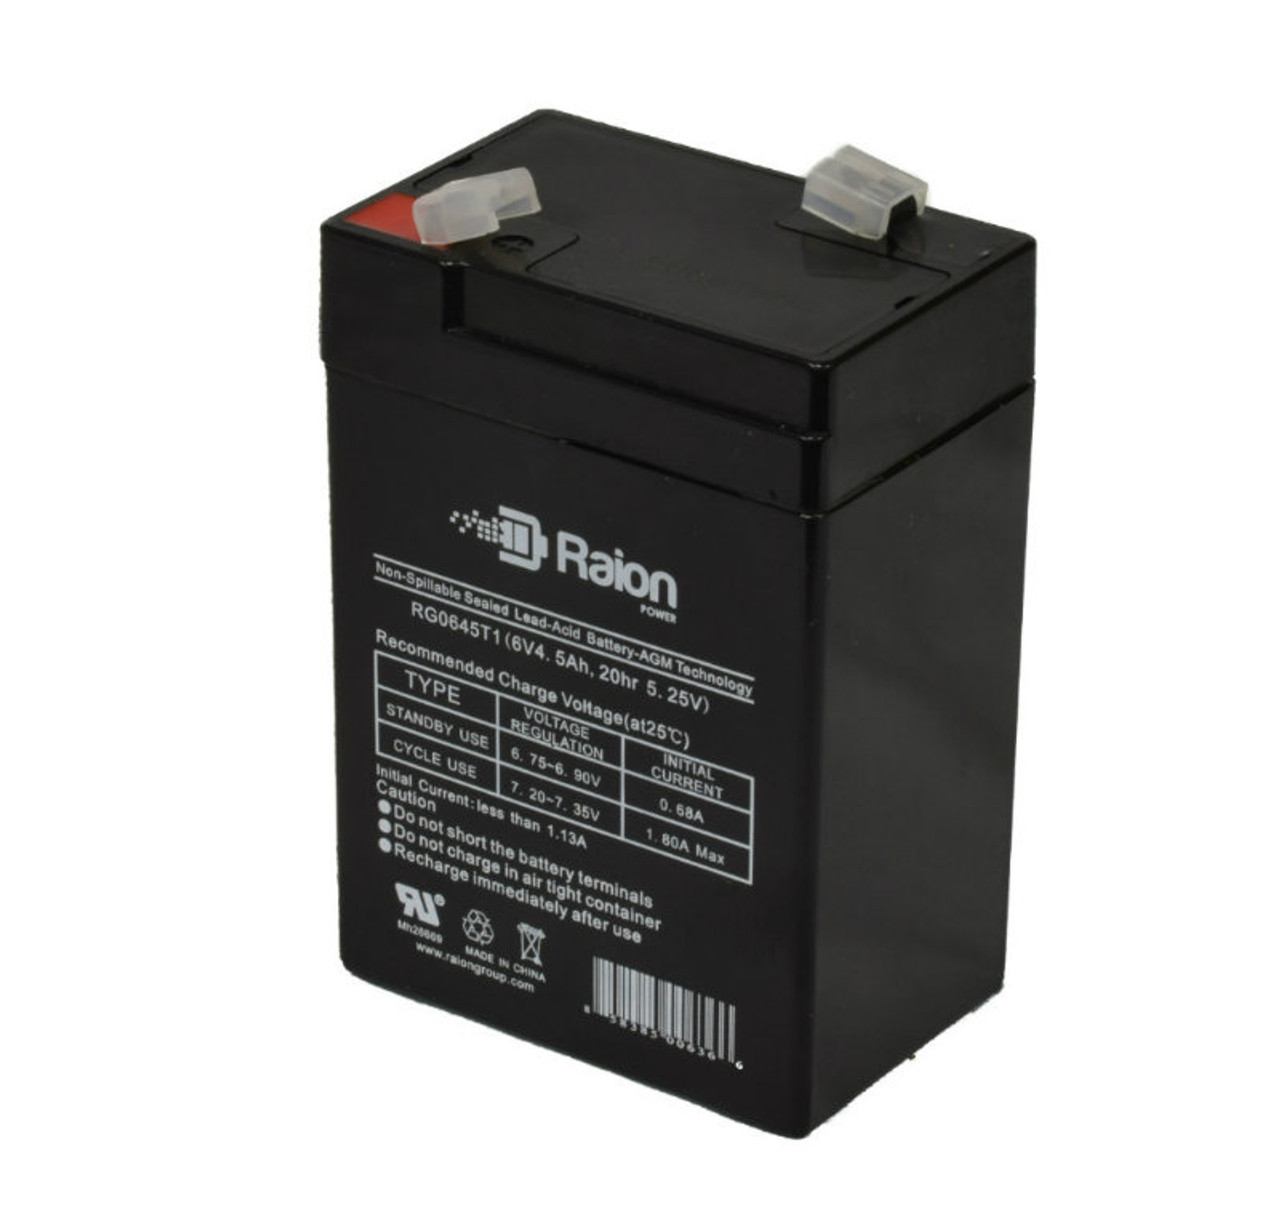 Raion Power RG0645T1 6V 4.5Ah Replacement Battery Cartridge for Hitachi HP4-6C